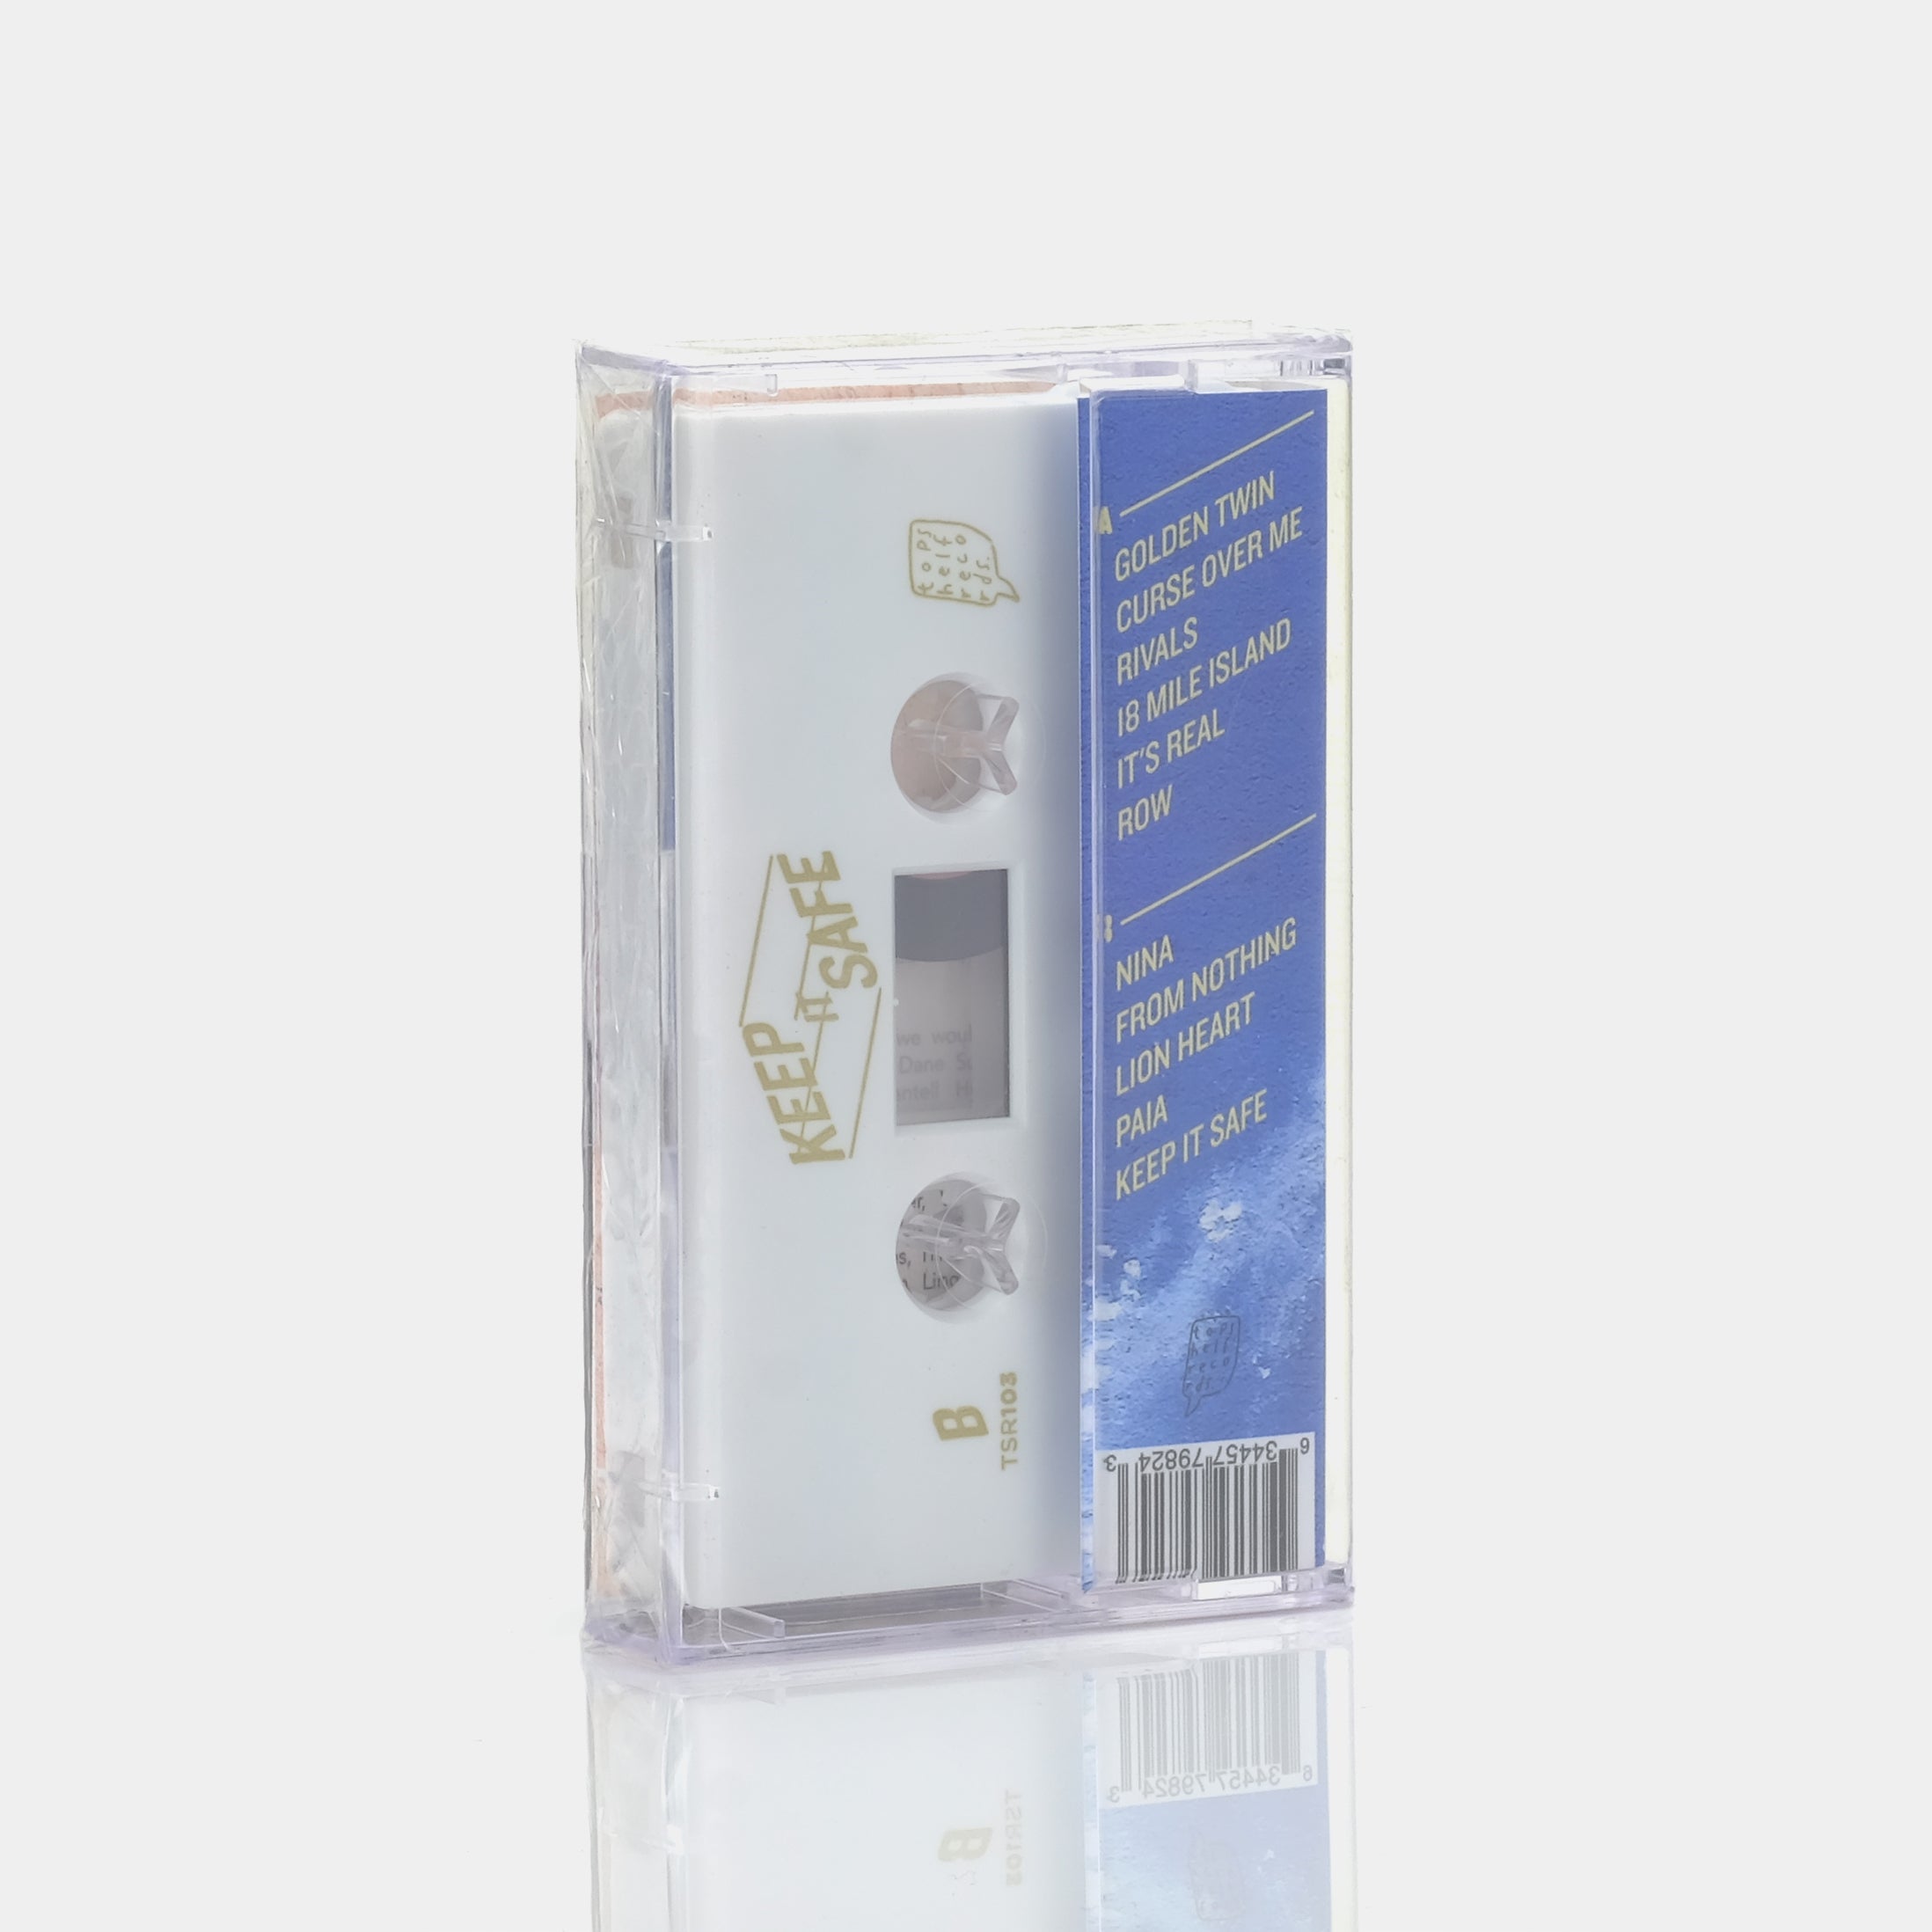 Wild Ones - Keep It Safe Cassette Tape